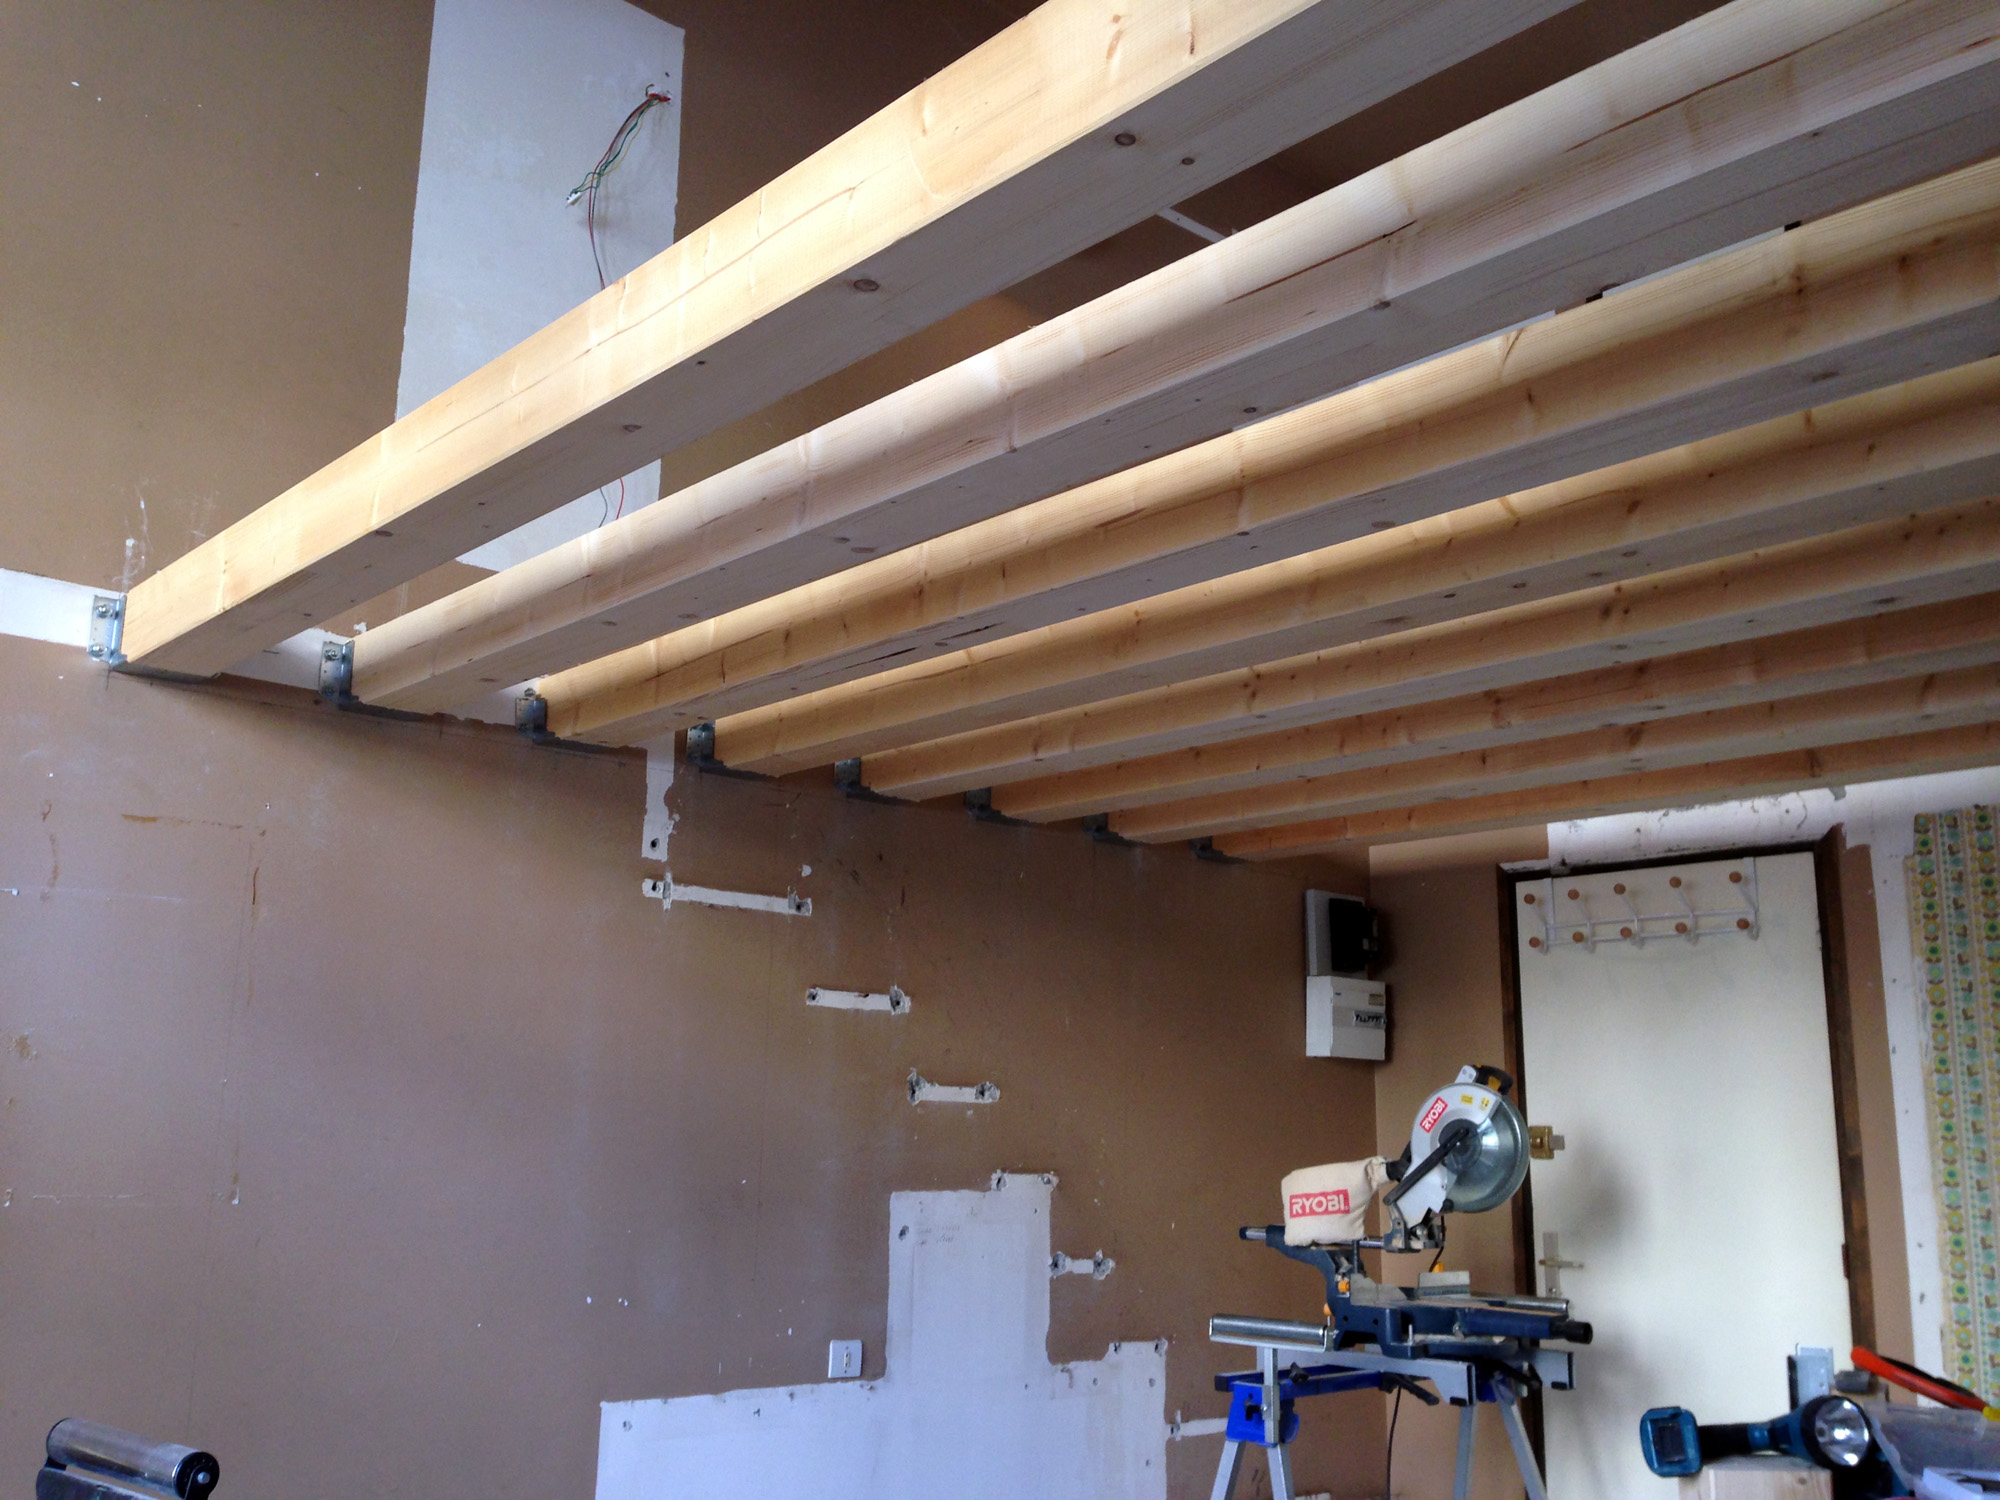 Chamonix studio renovation - build thread - Page 3 - Homes, Gardens and DIY - PistonHeads